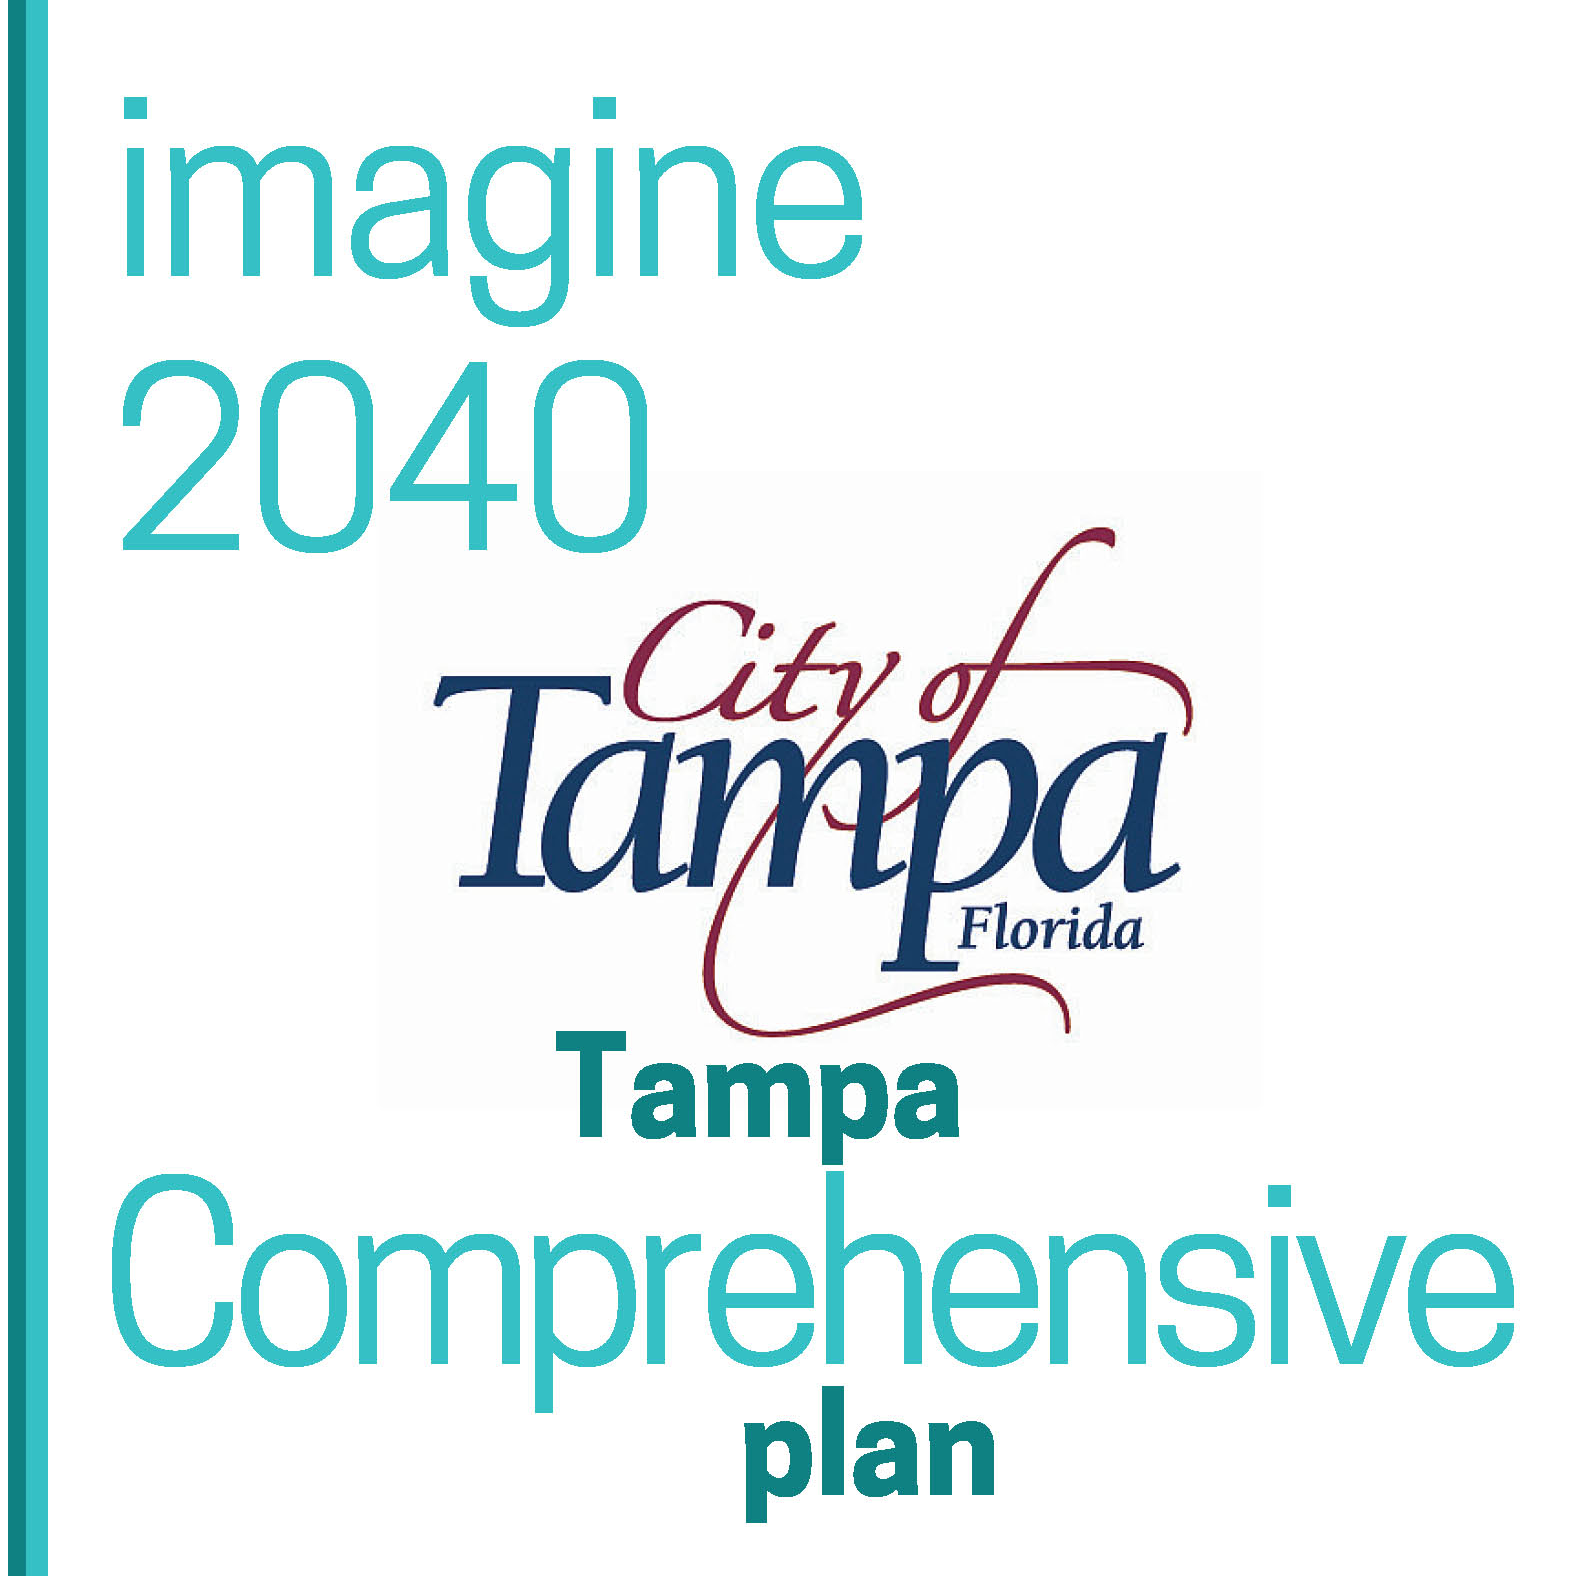 imagine 2040: Tampa Comprehensive Plan